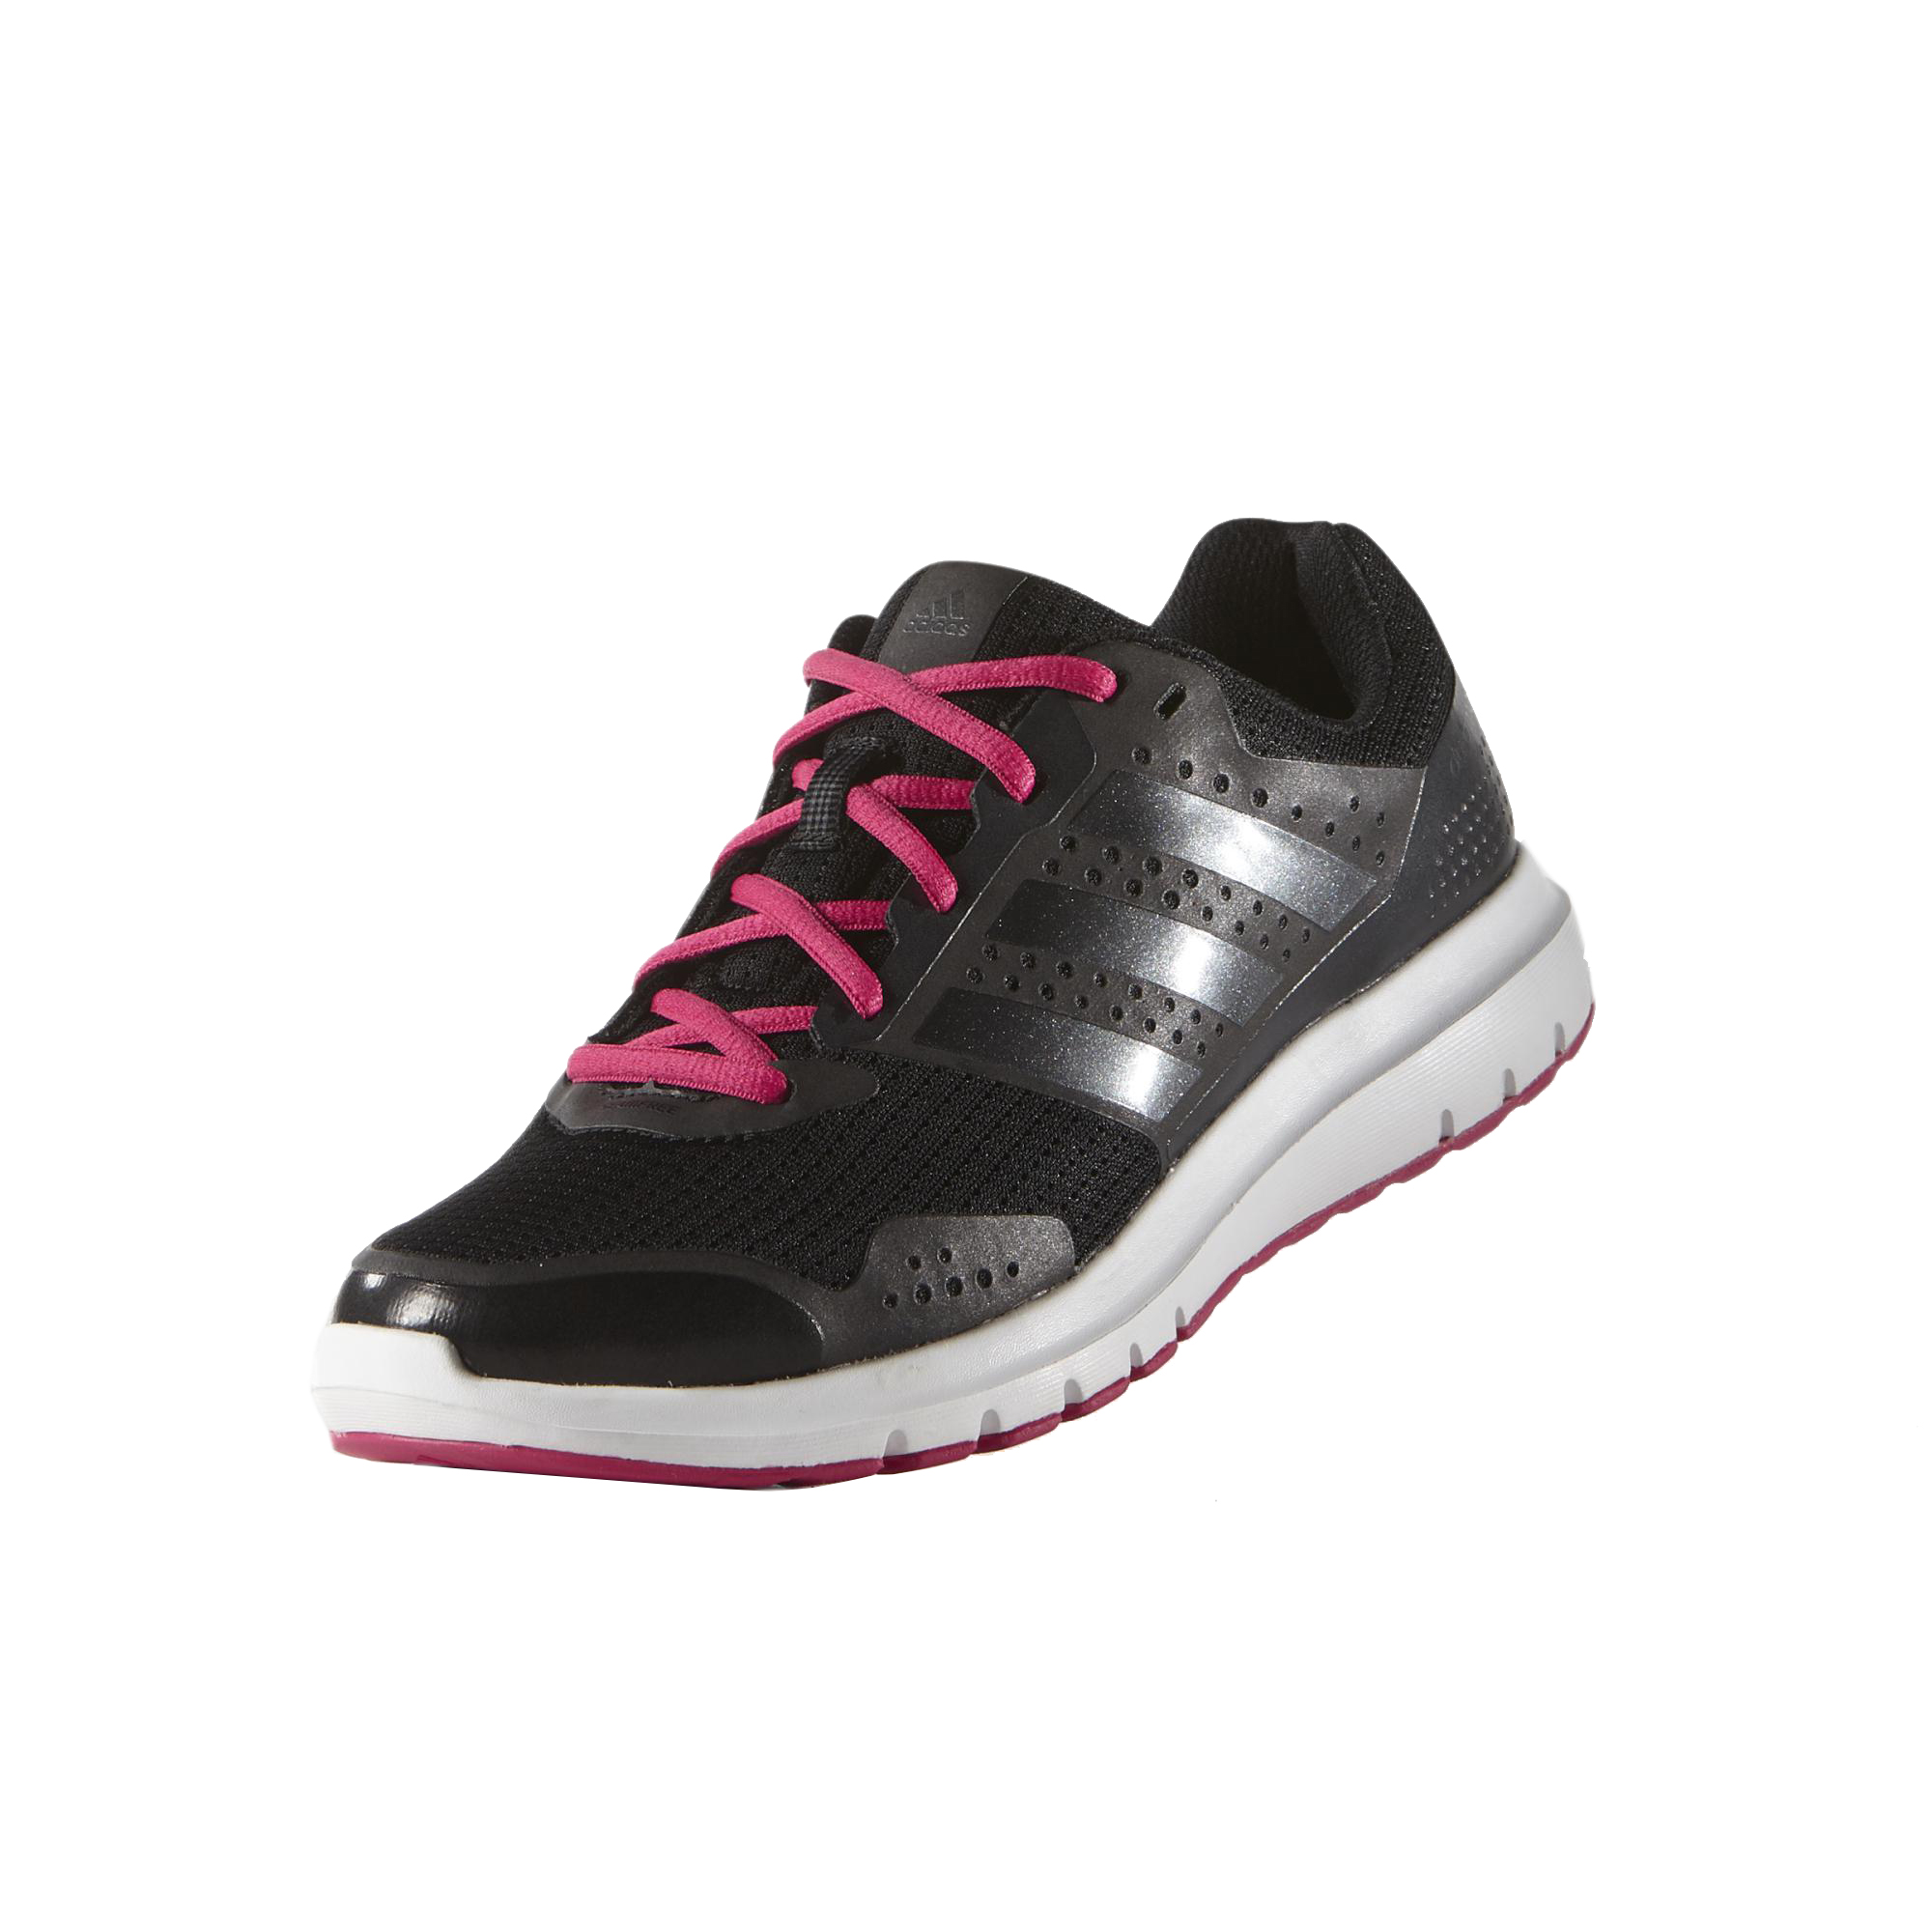 Hacer Margaret Mitchell Revelar Adidas Duramo 7 W (negro/blanco/rosa) - manelsanchez.com